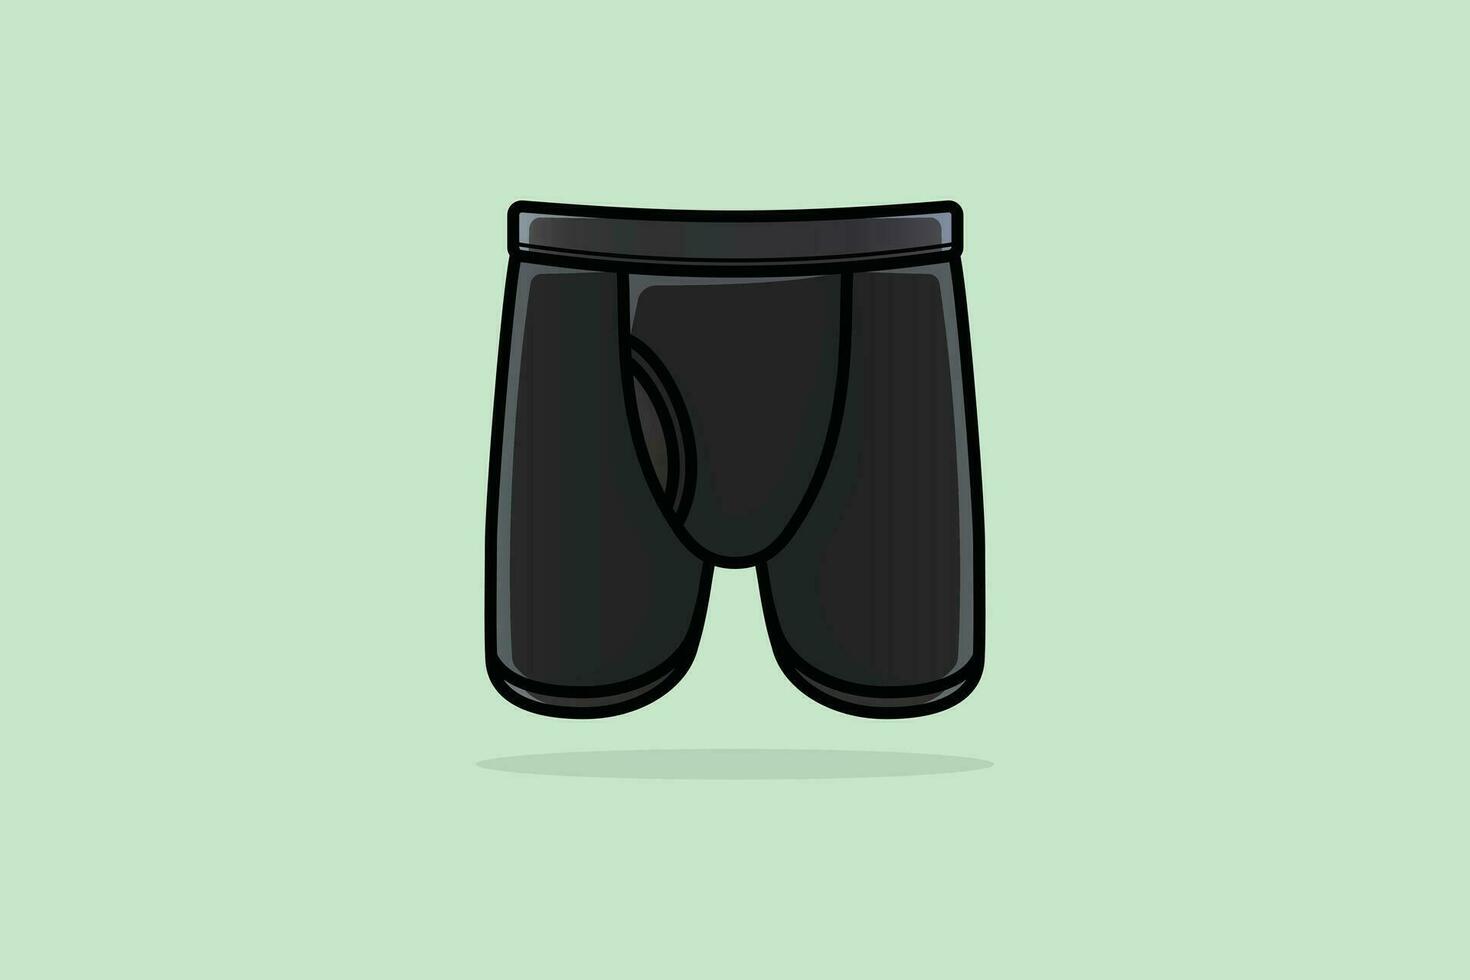 Men Sports Underwear vector illustration. Sports and fashion